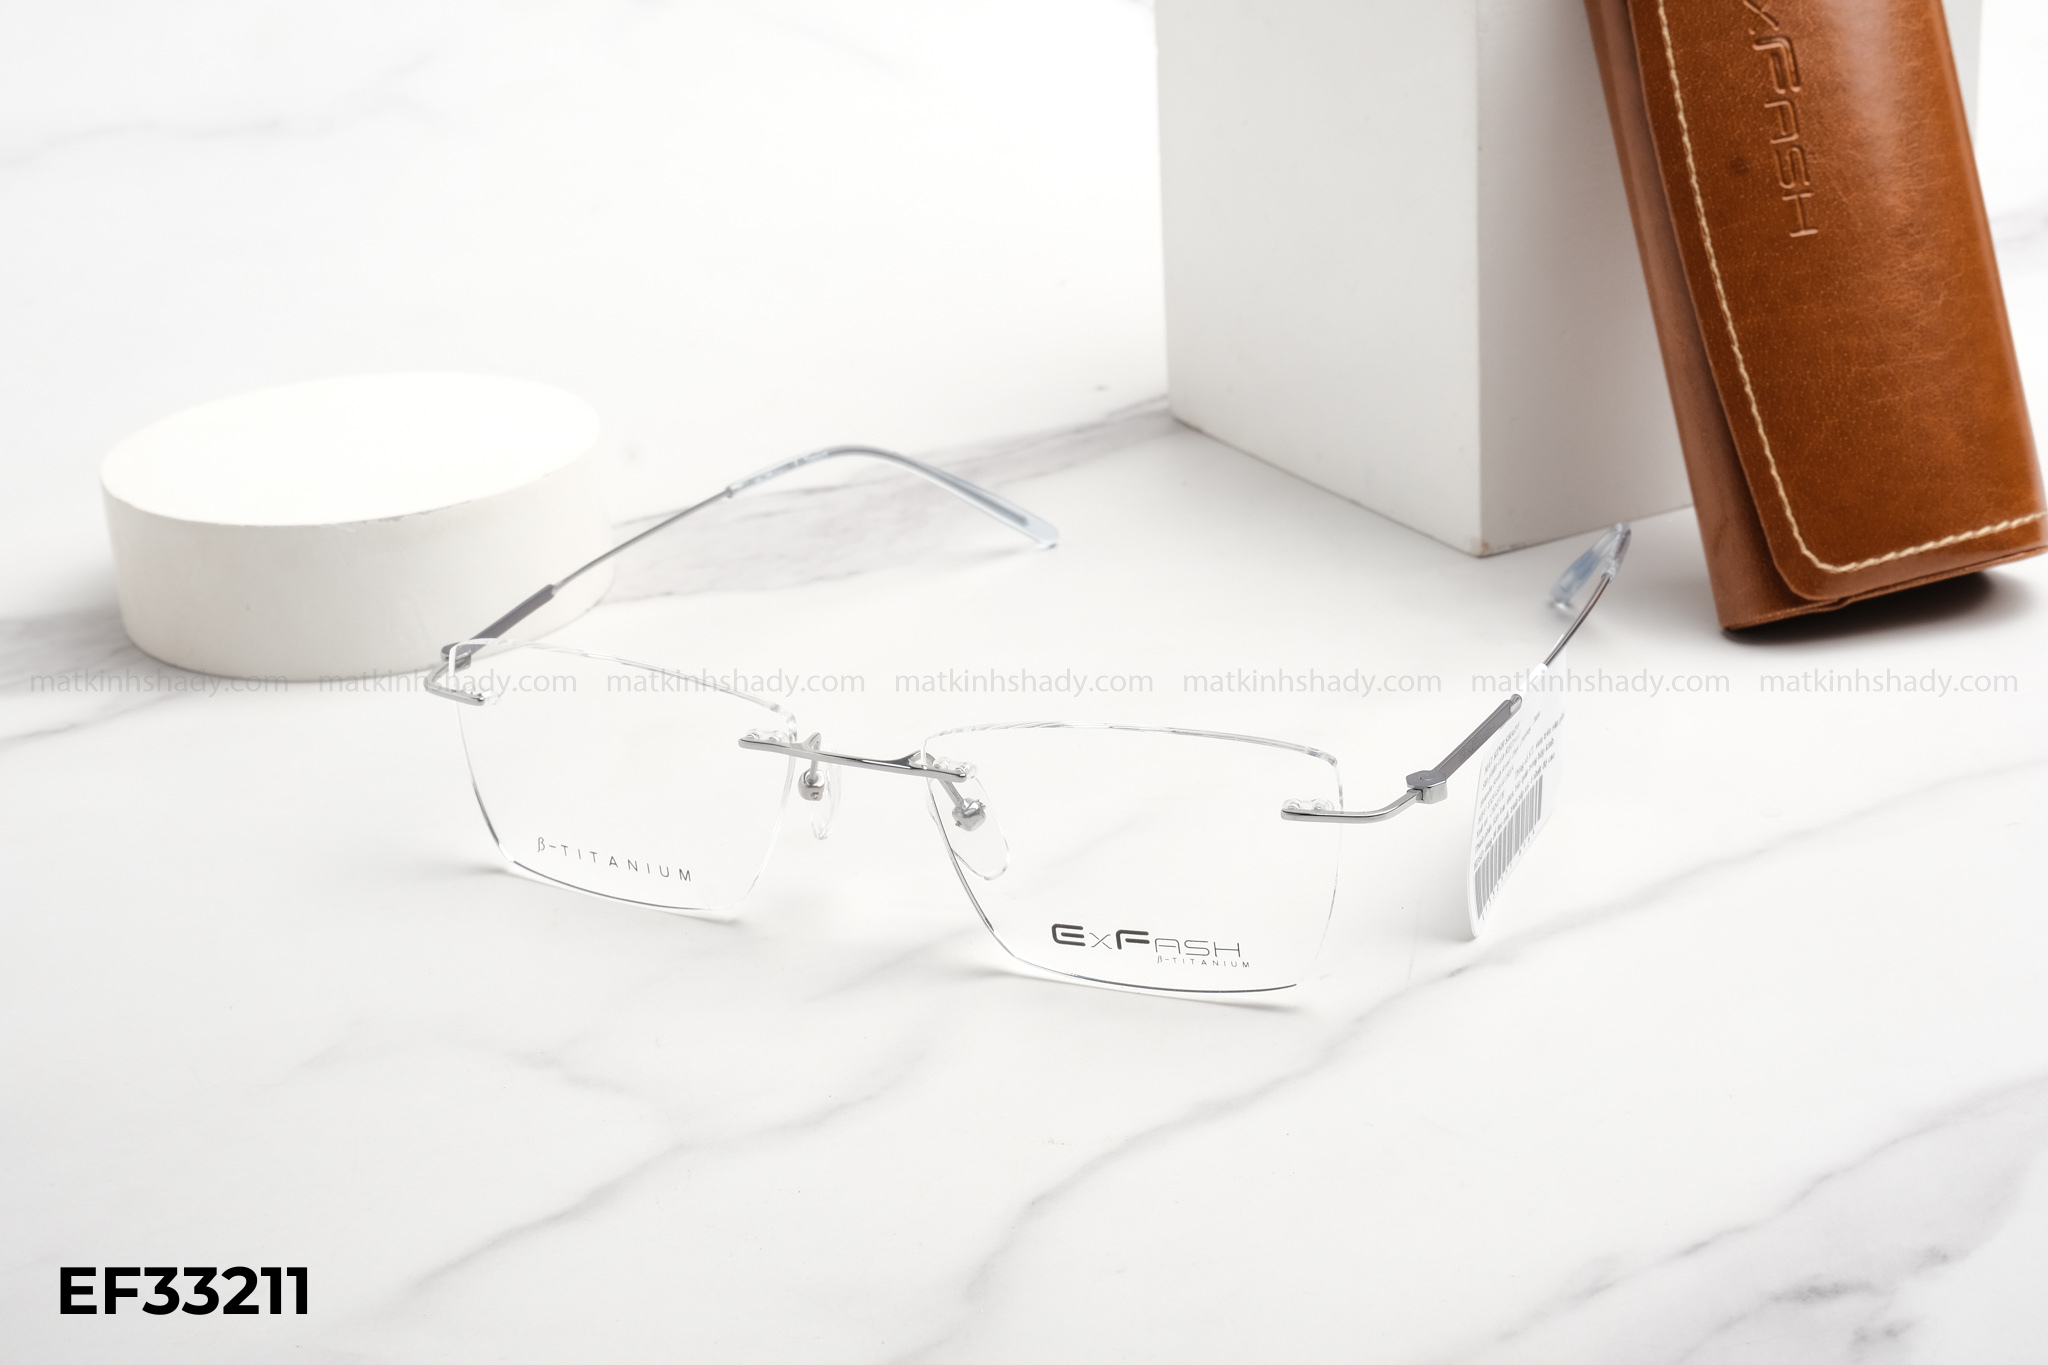  Exfash Eyewear - Glasses - EF33211 